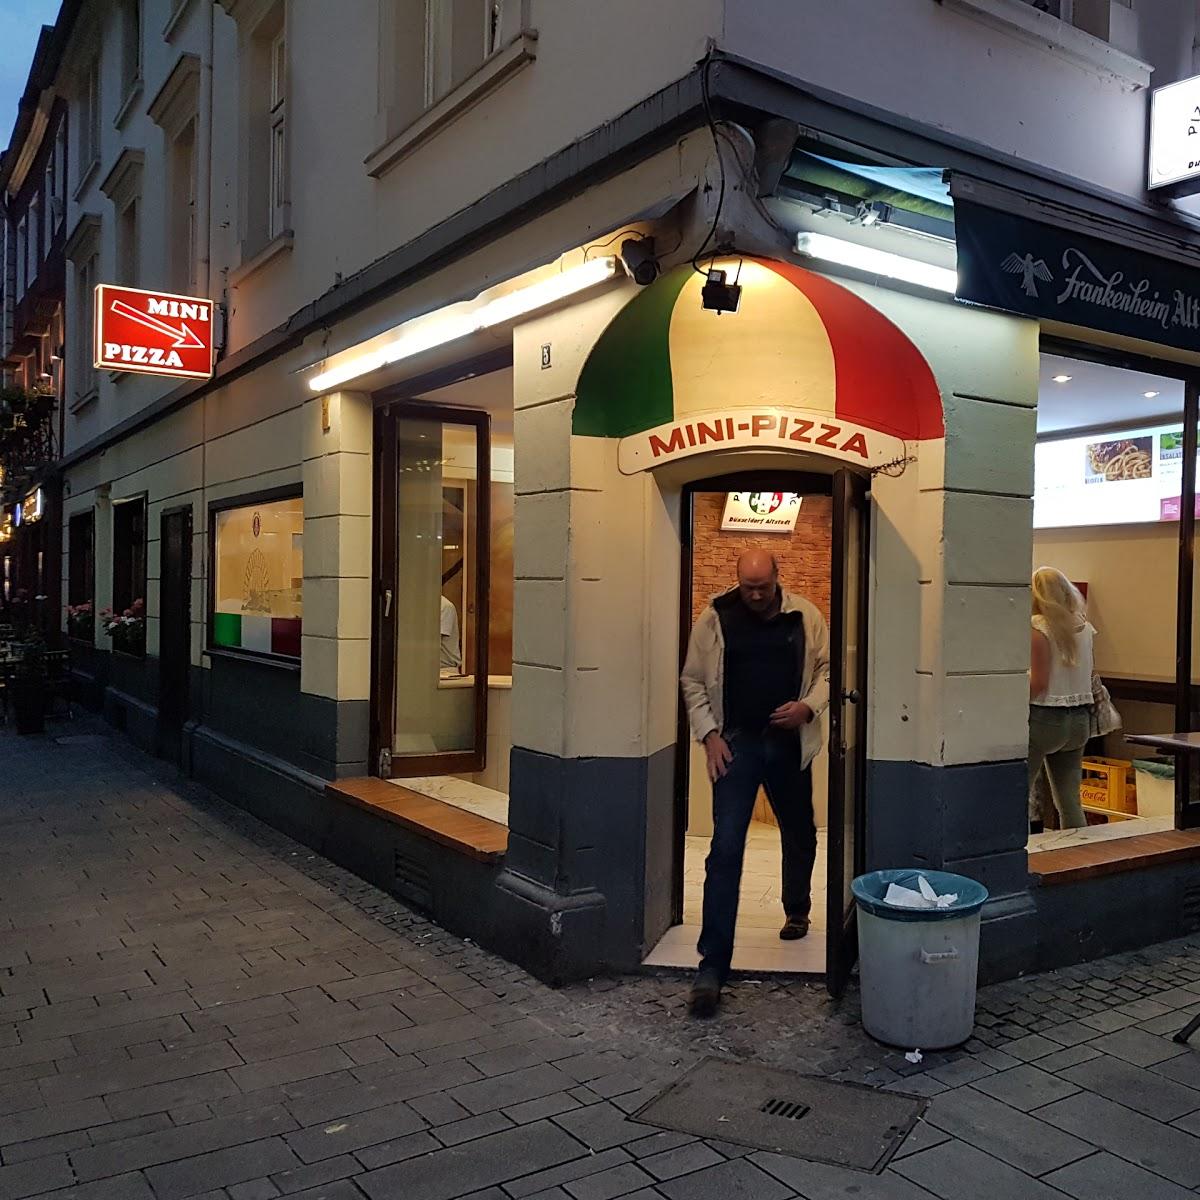 Restaurant "Pizzeria Colopic" in Düsseldorf